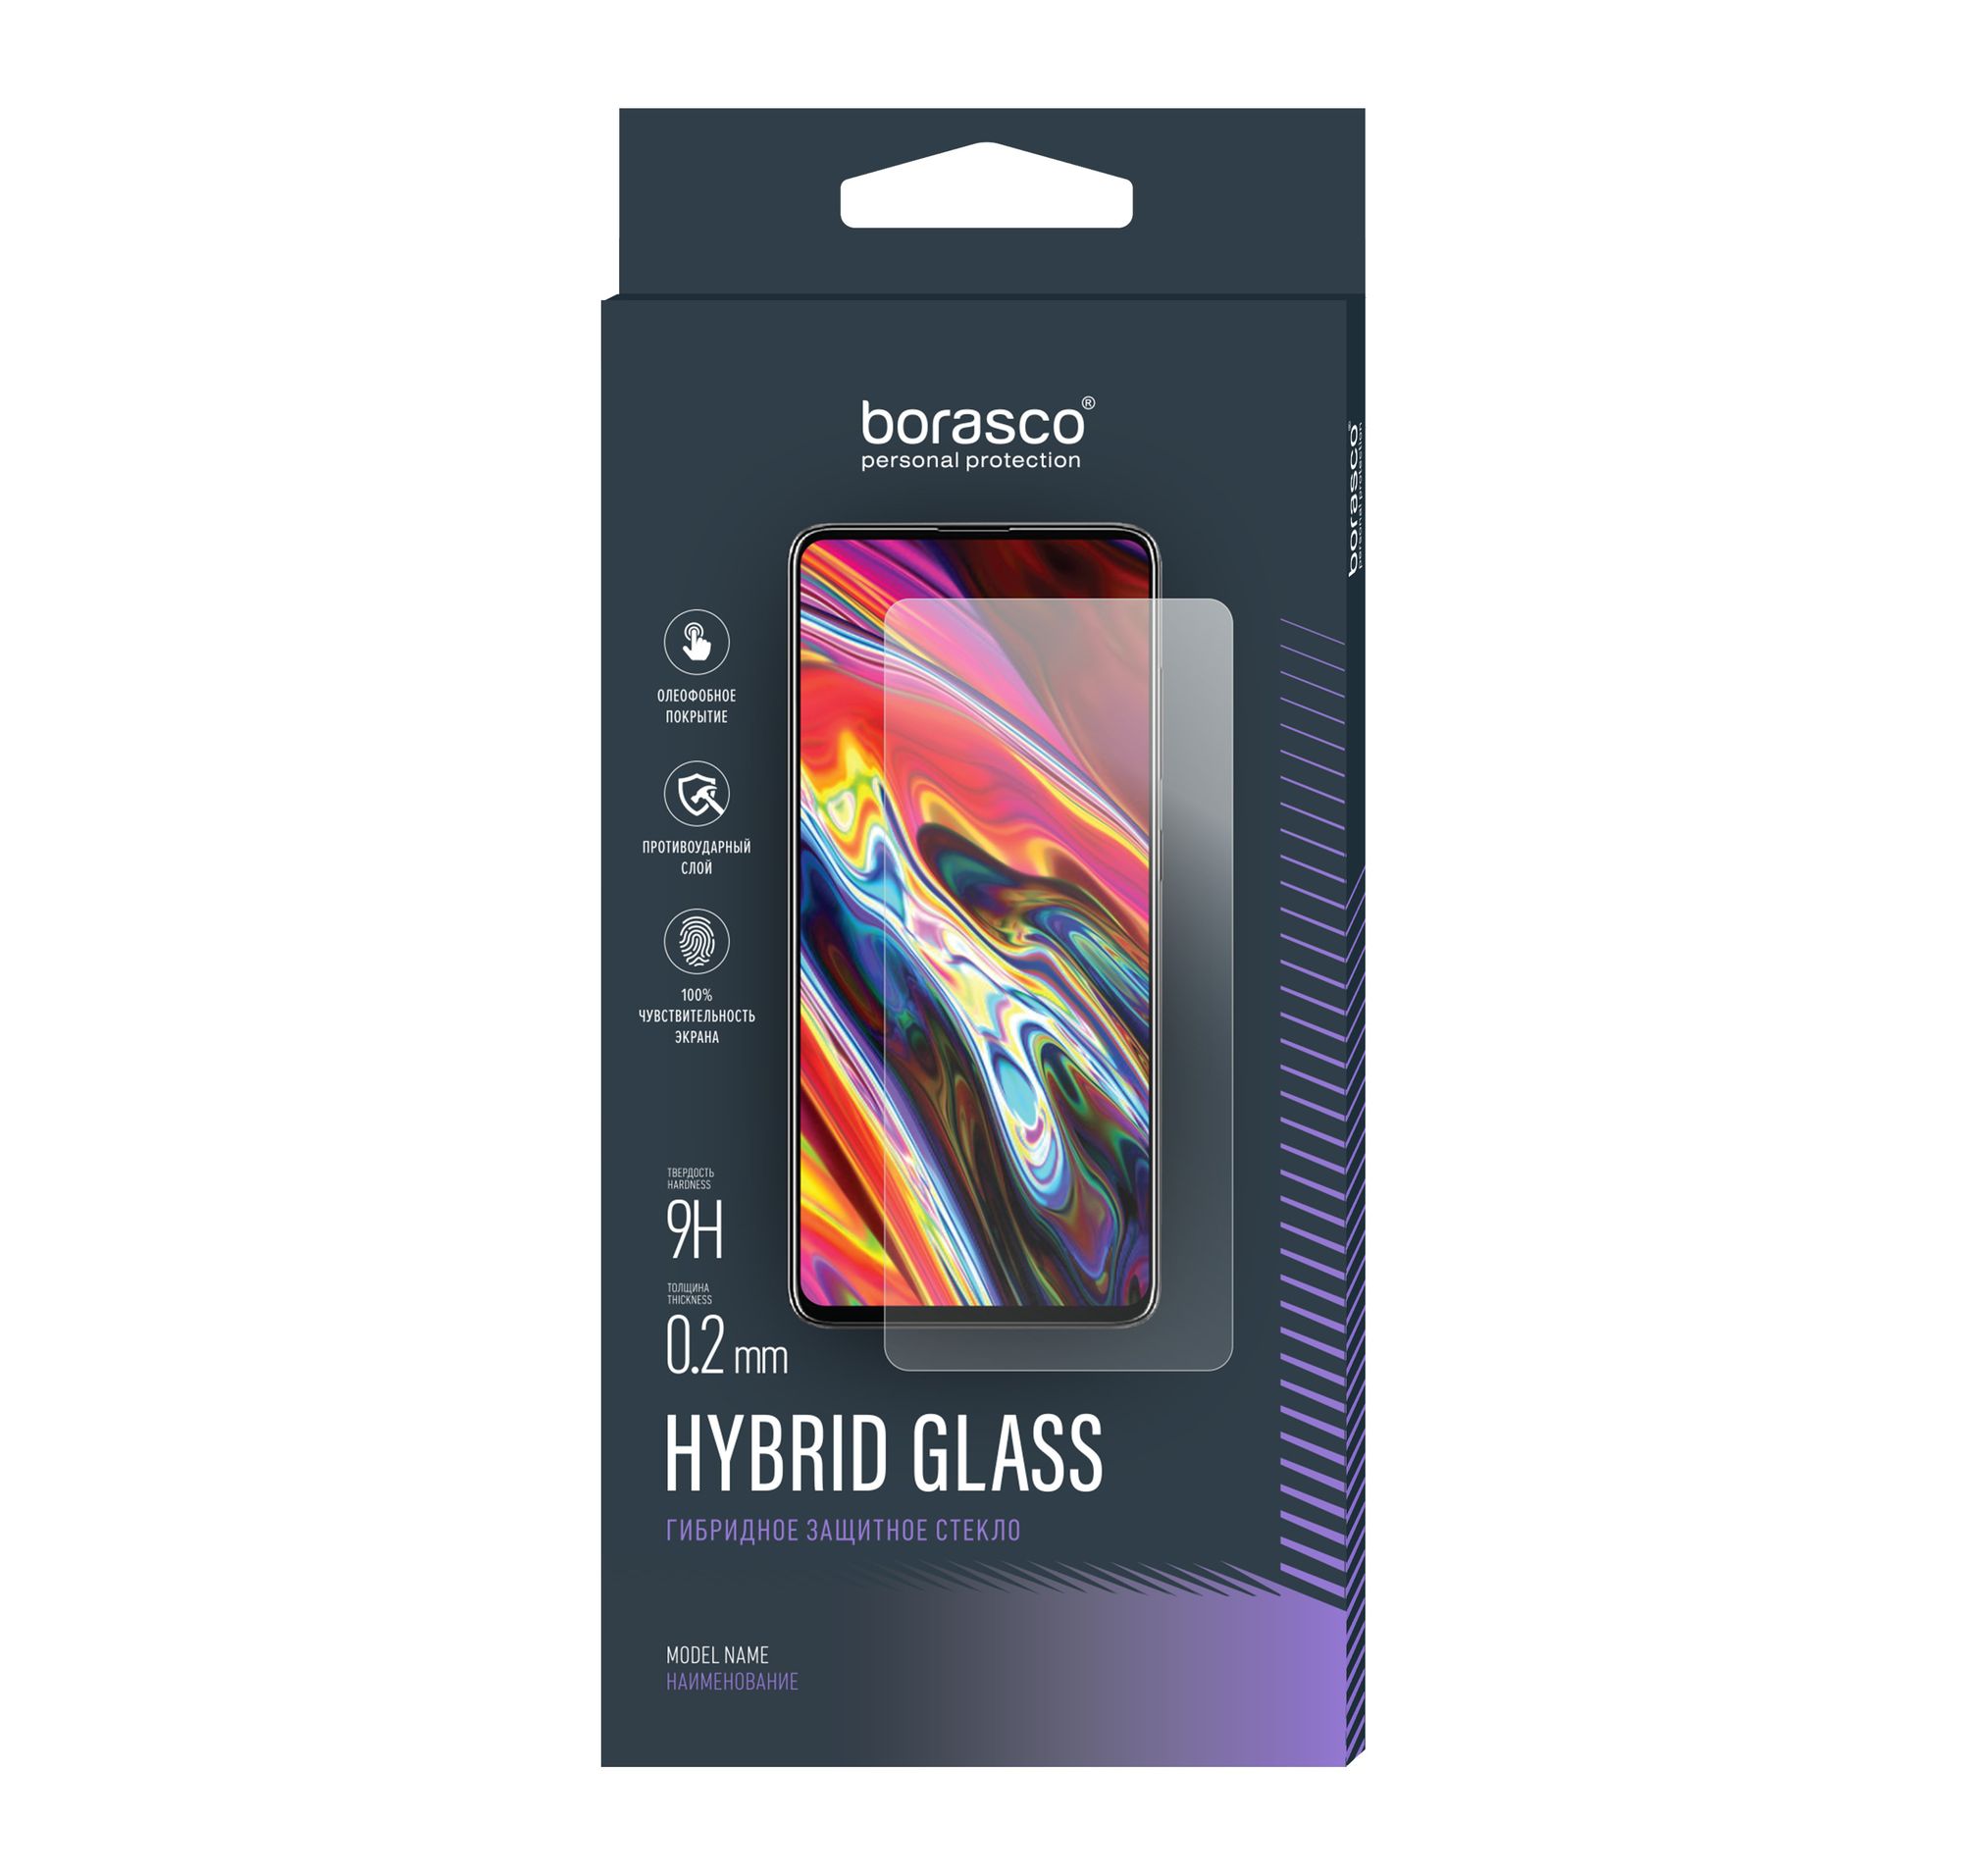 Стекло защитное Hybrid Glass VSP 0,26 мм для Prestigio Wize Q3 стекло защитное borasco hybrid glass prestigio wize 1107 4g 7 прозрачное